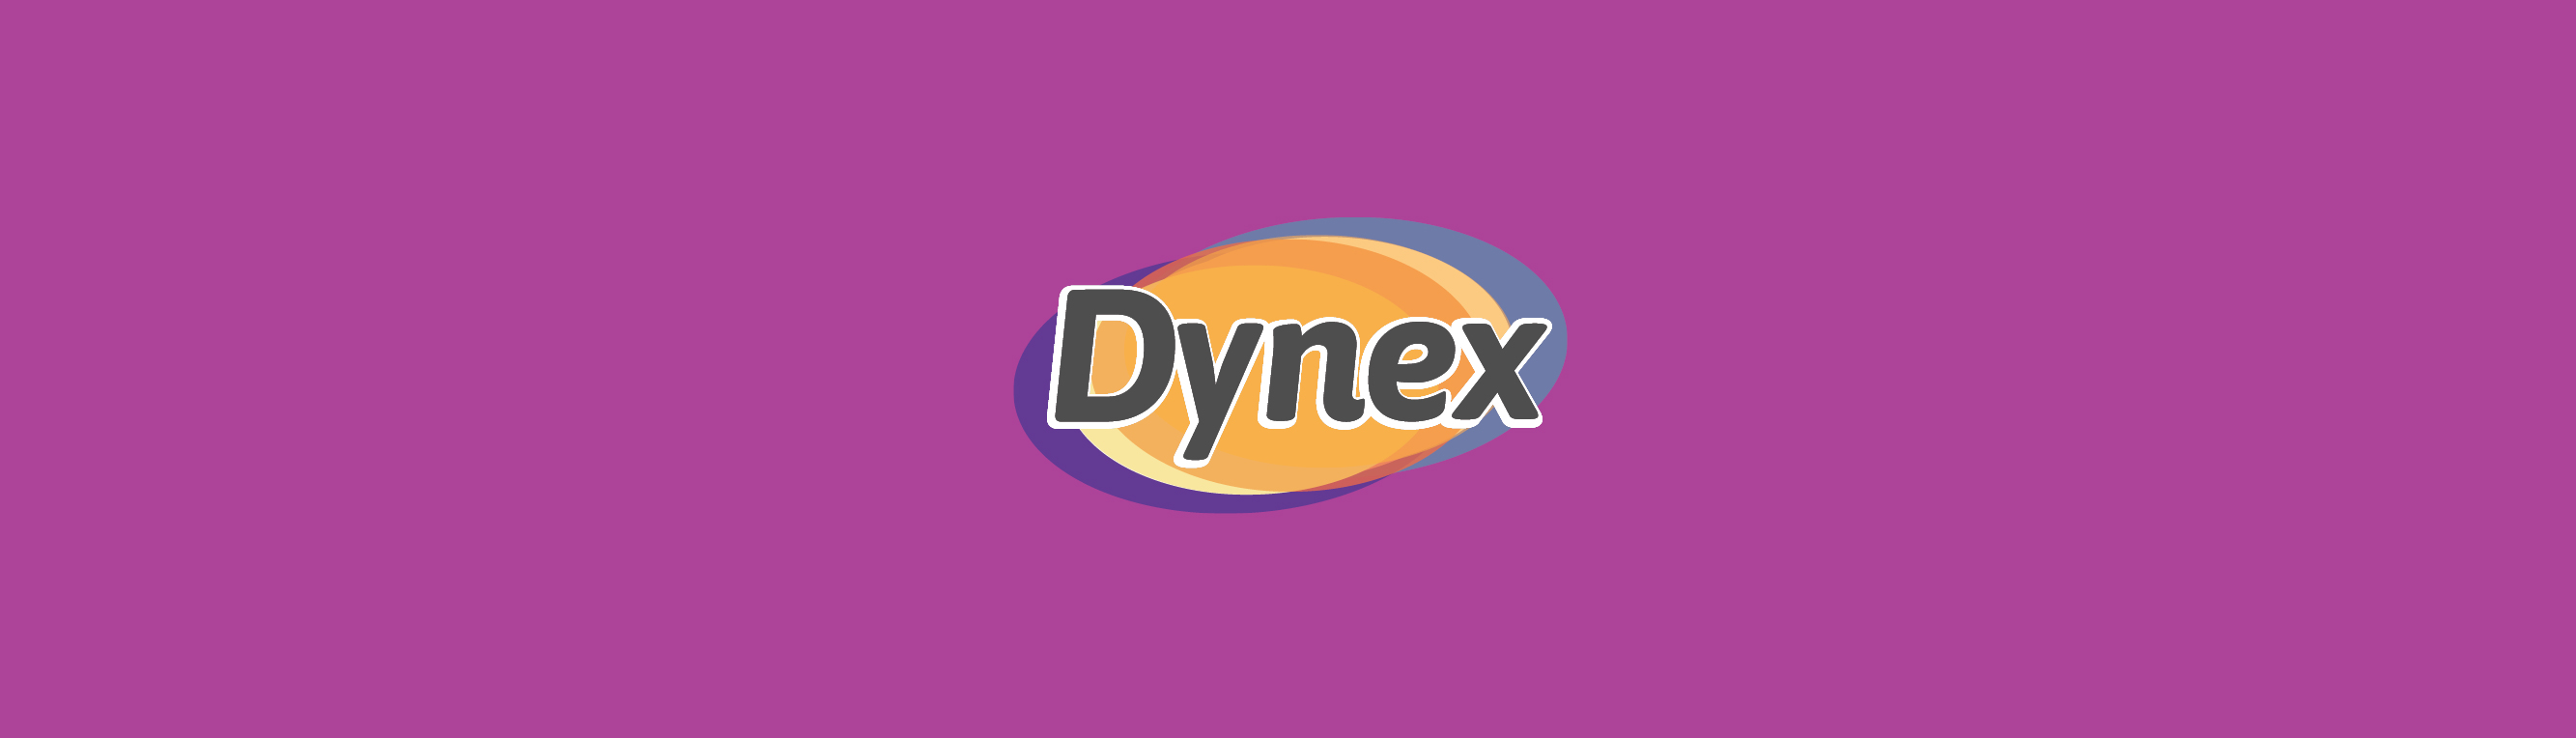 dynex_header